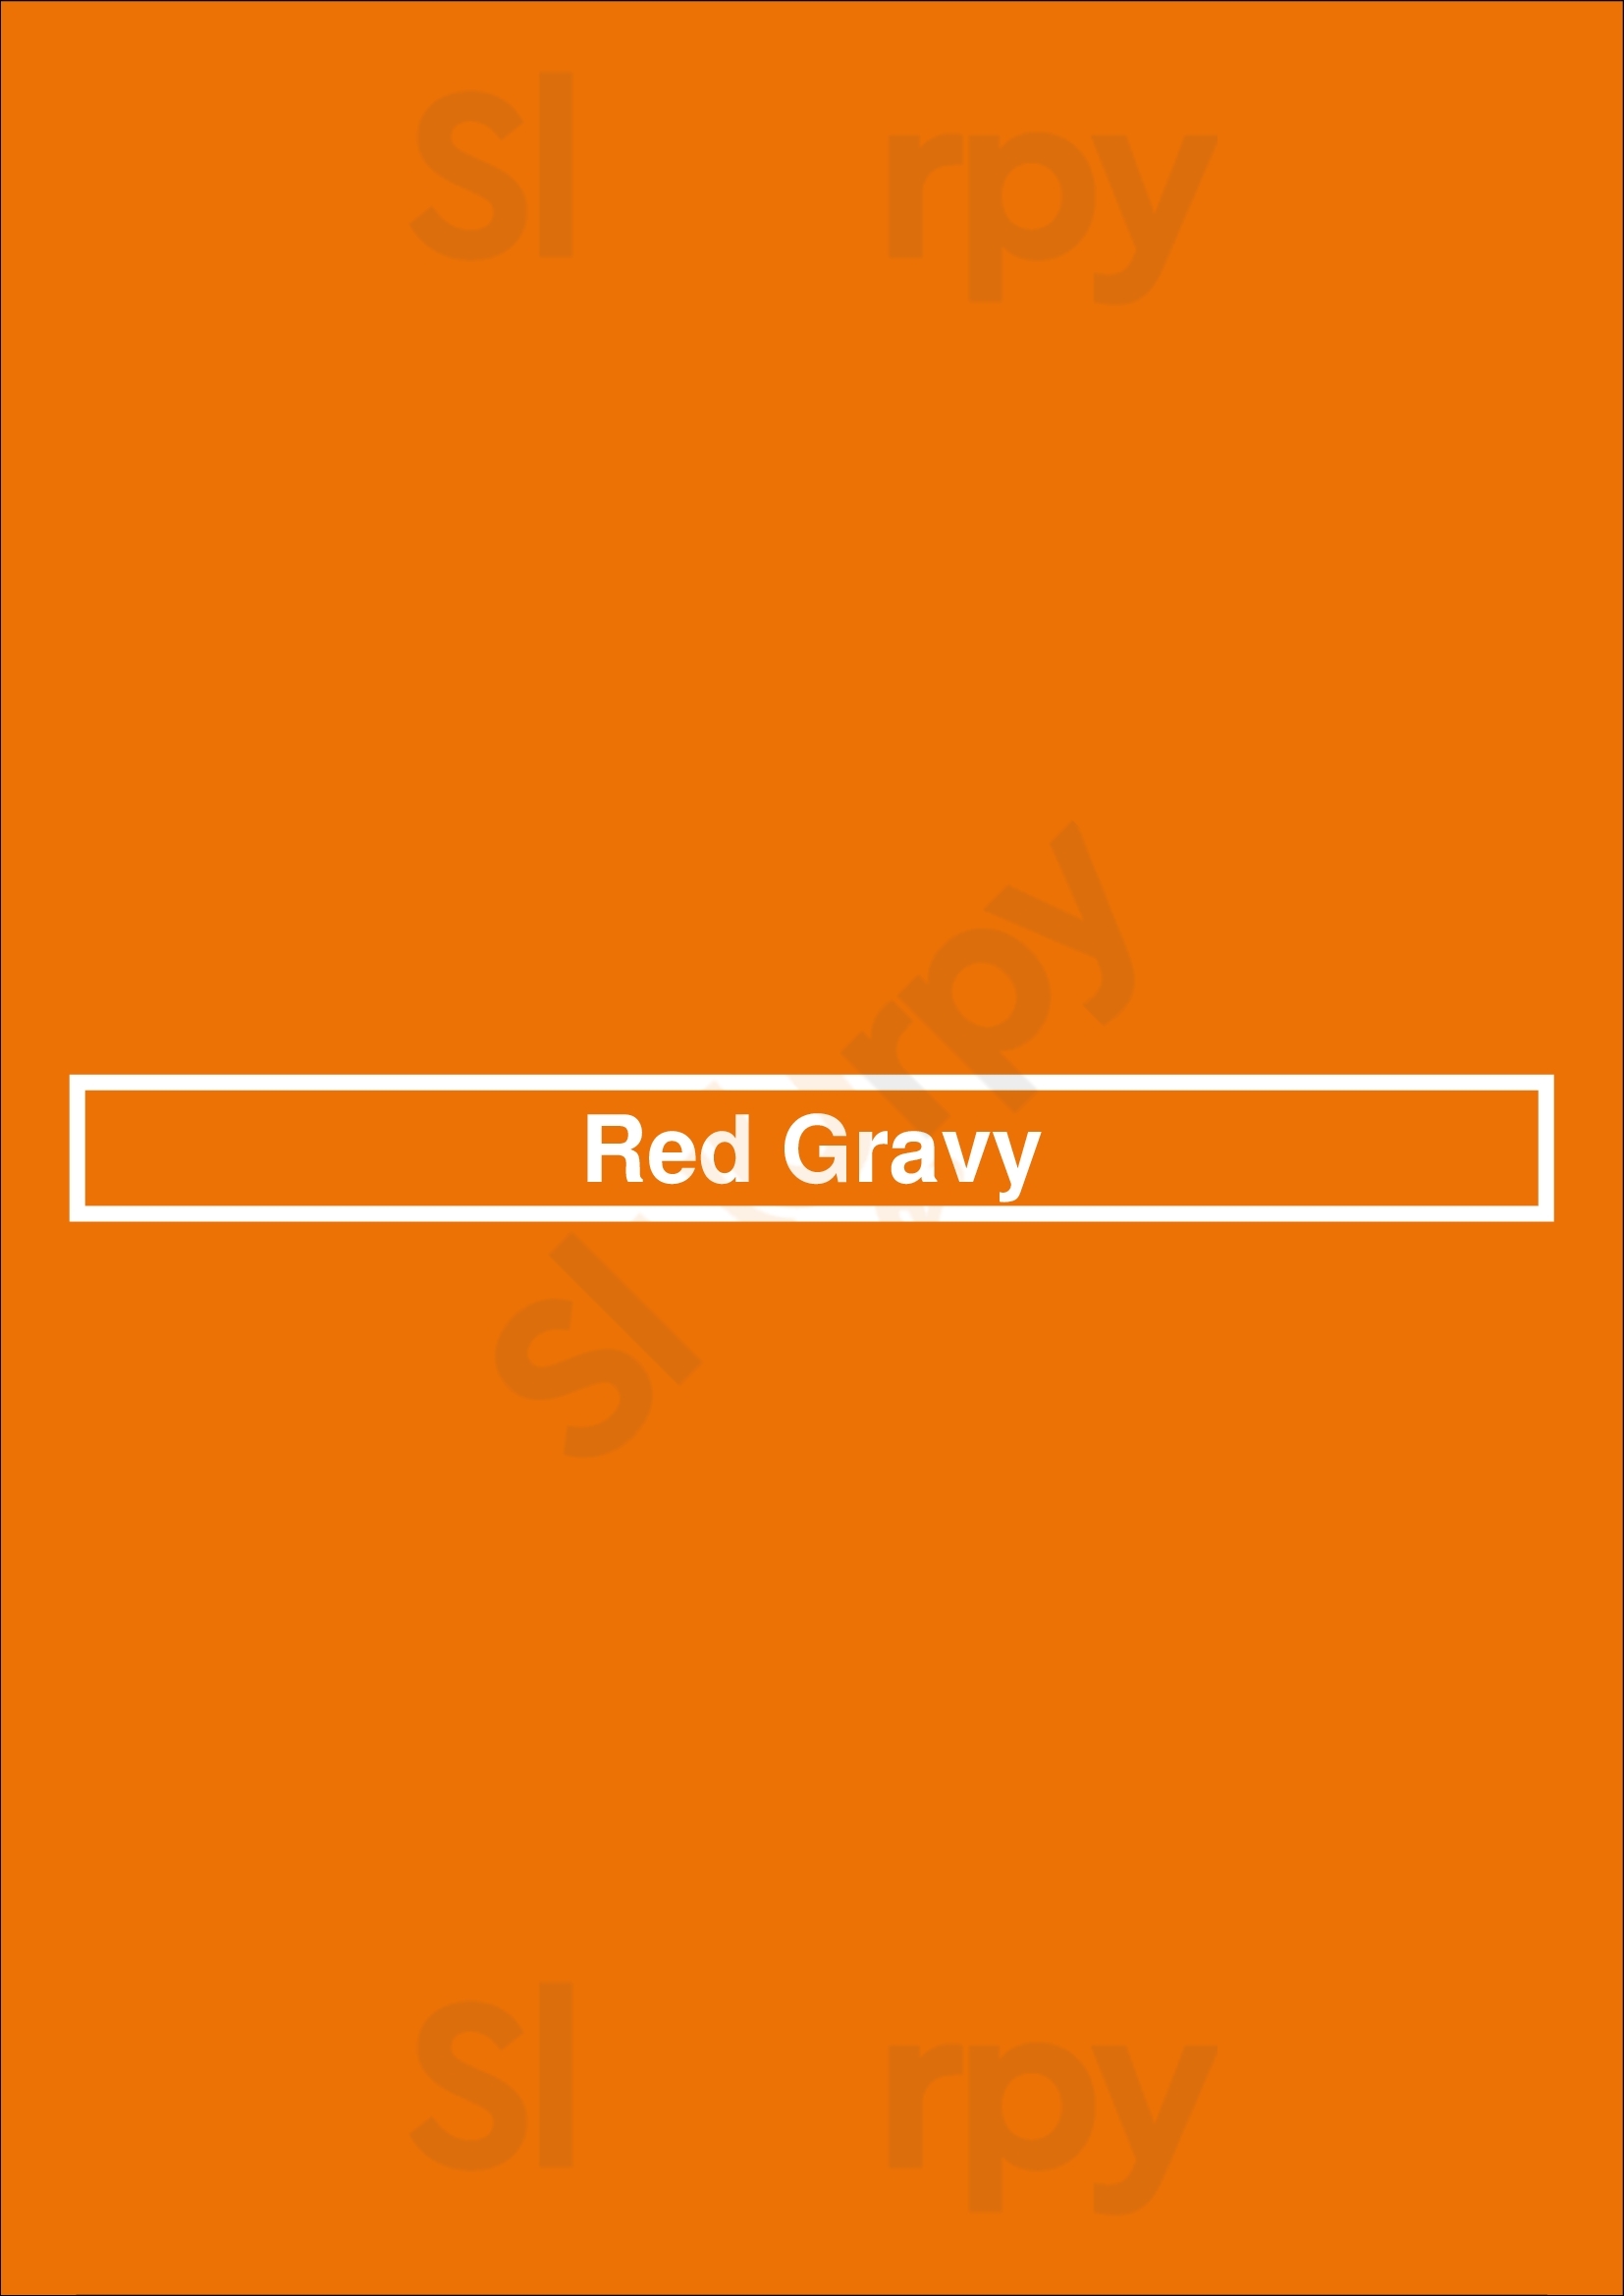 Red Gravy New Orleans Menu - 1